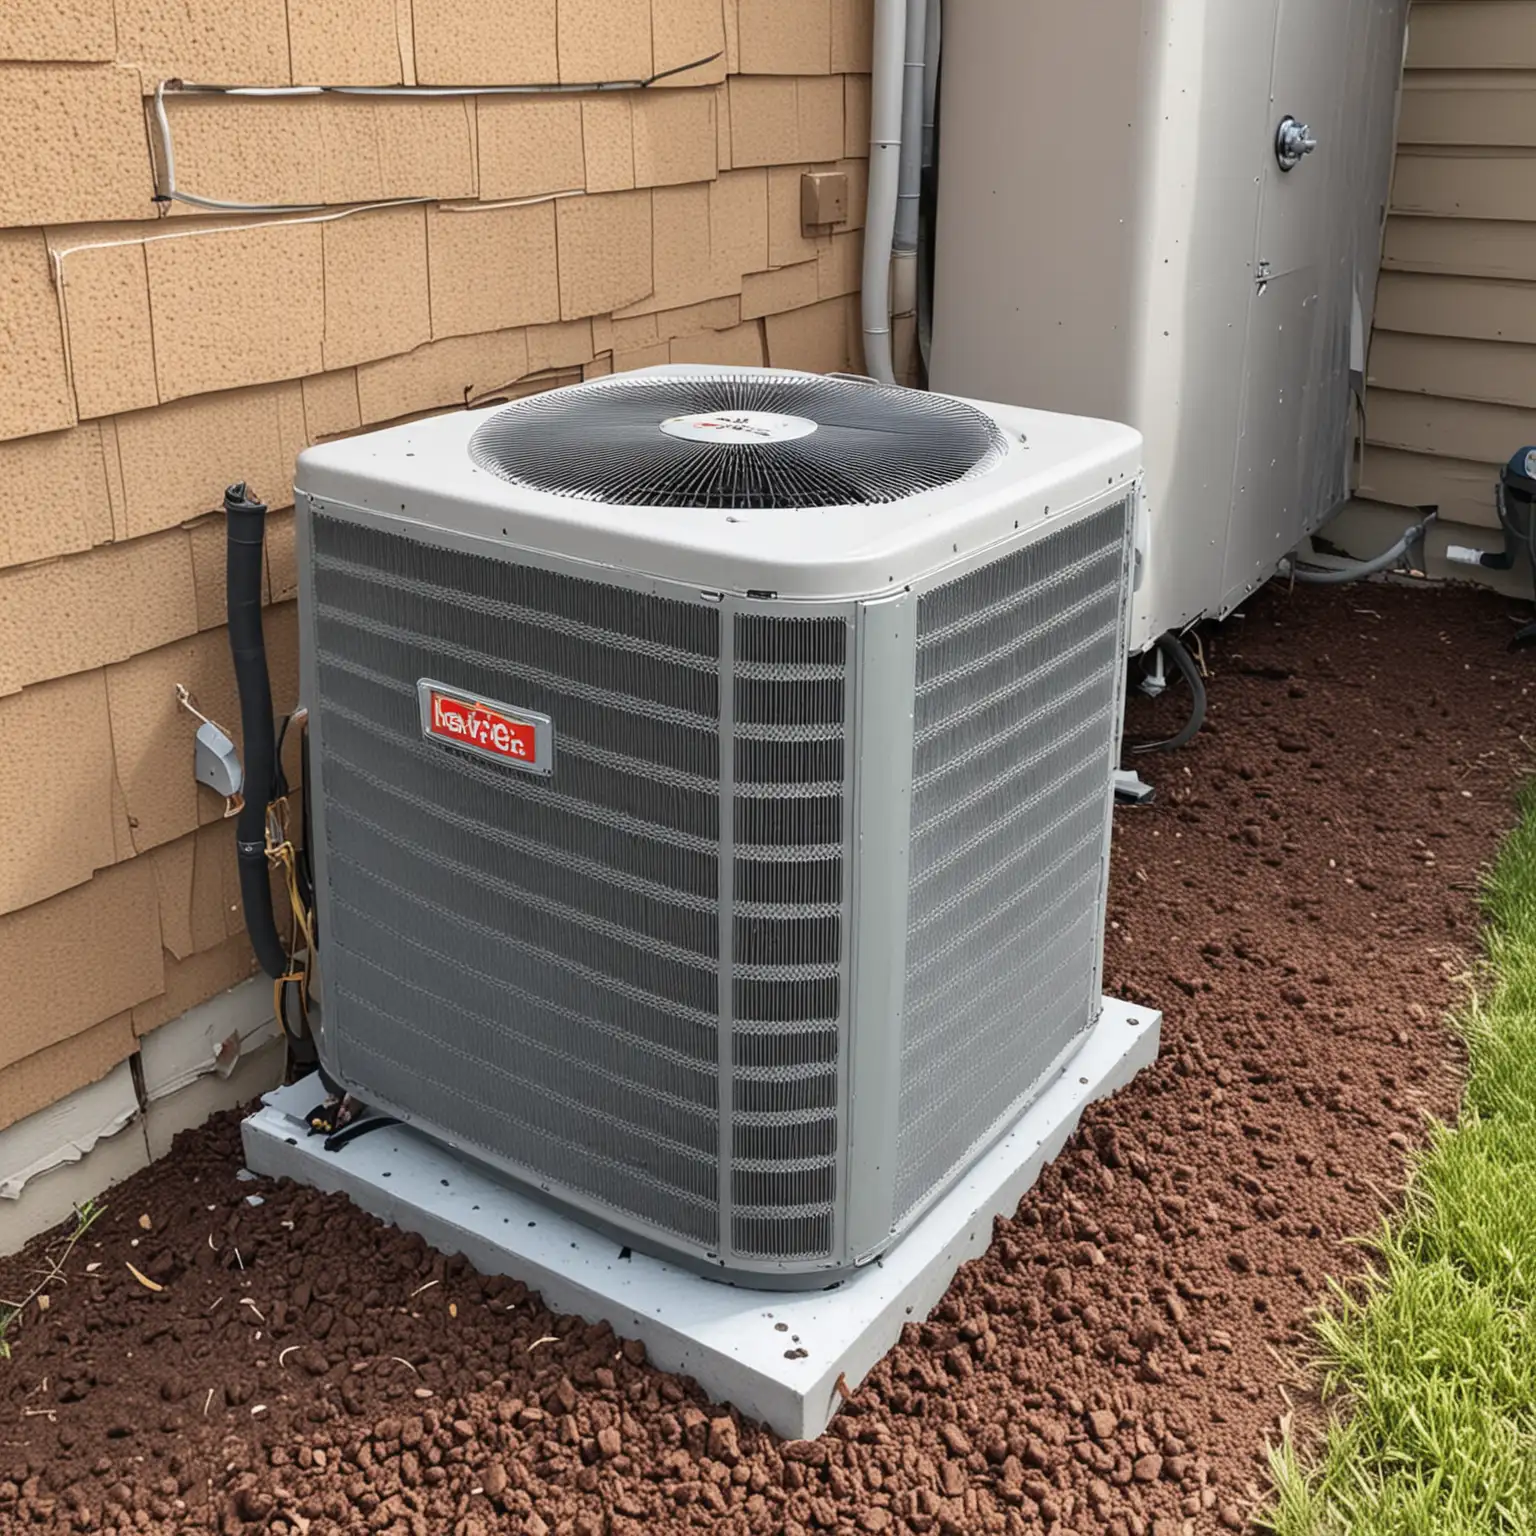 Outdoor HVAC Unit at Home in Georgia